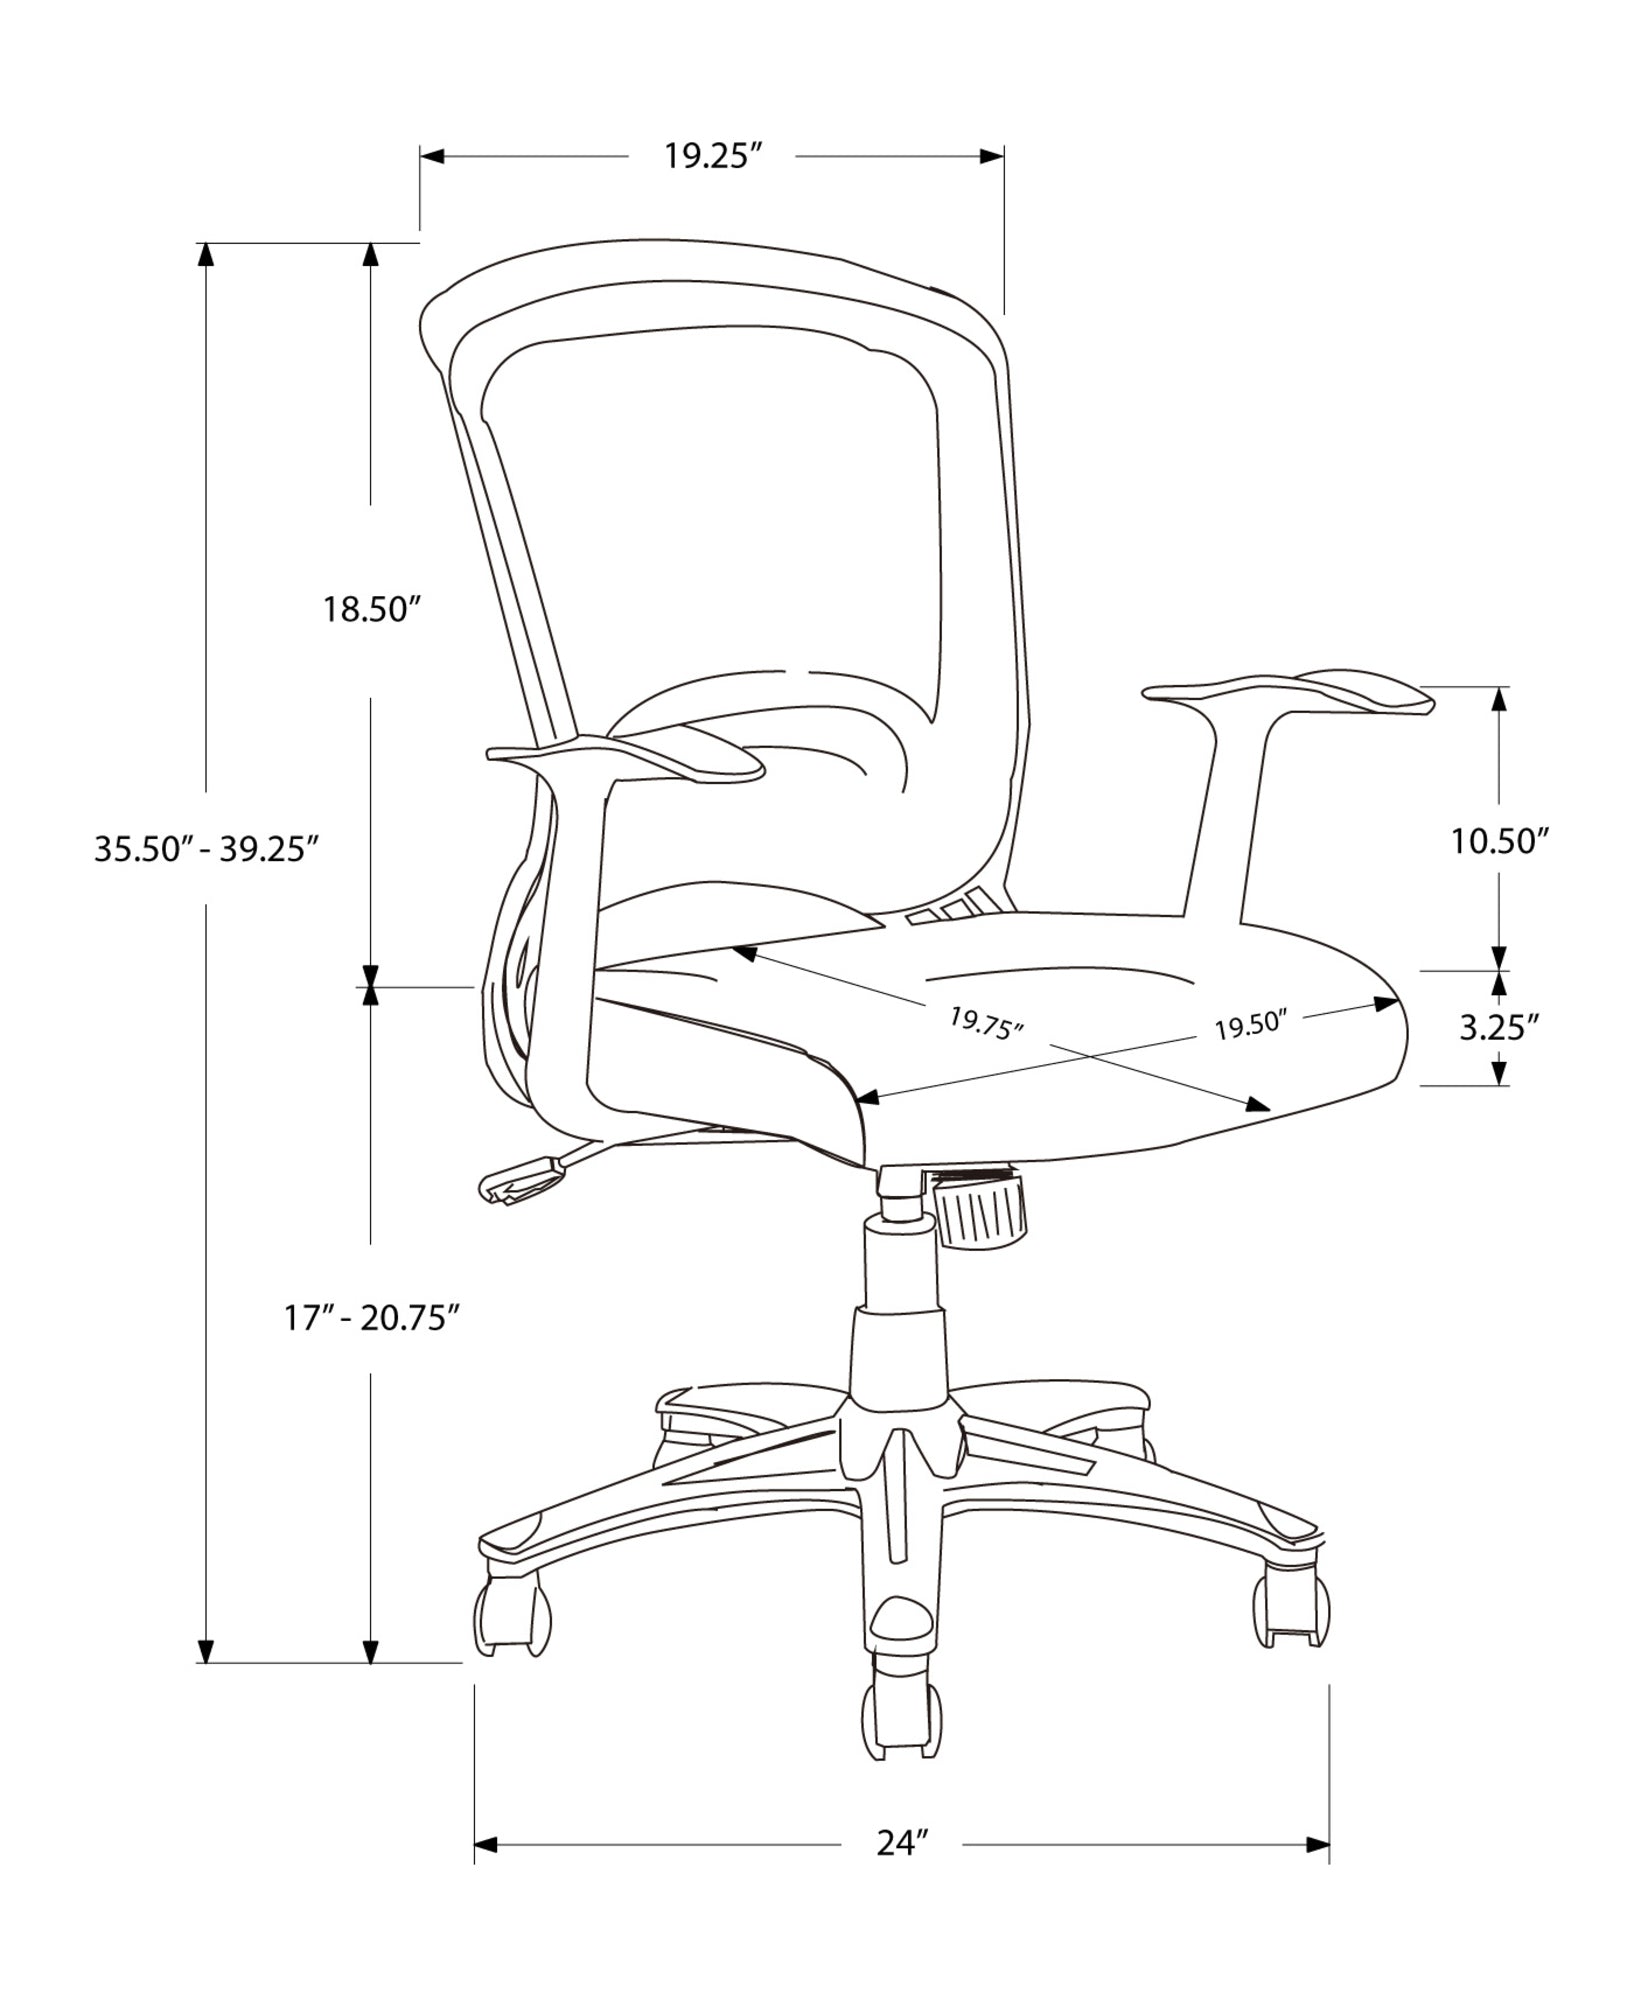 Office Chair - Black Mesh Mid-Back / Multi-Position